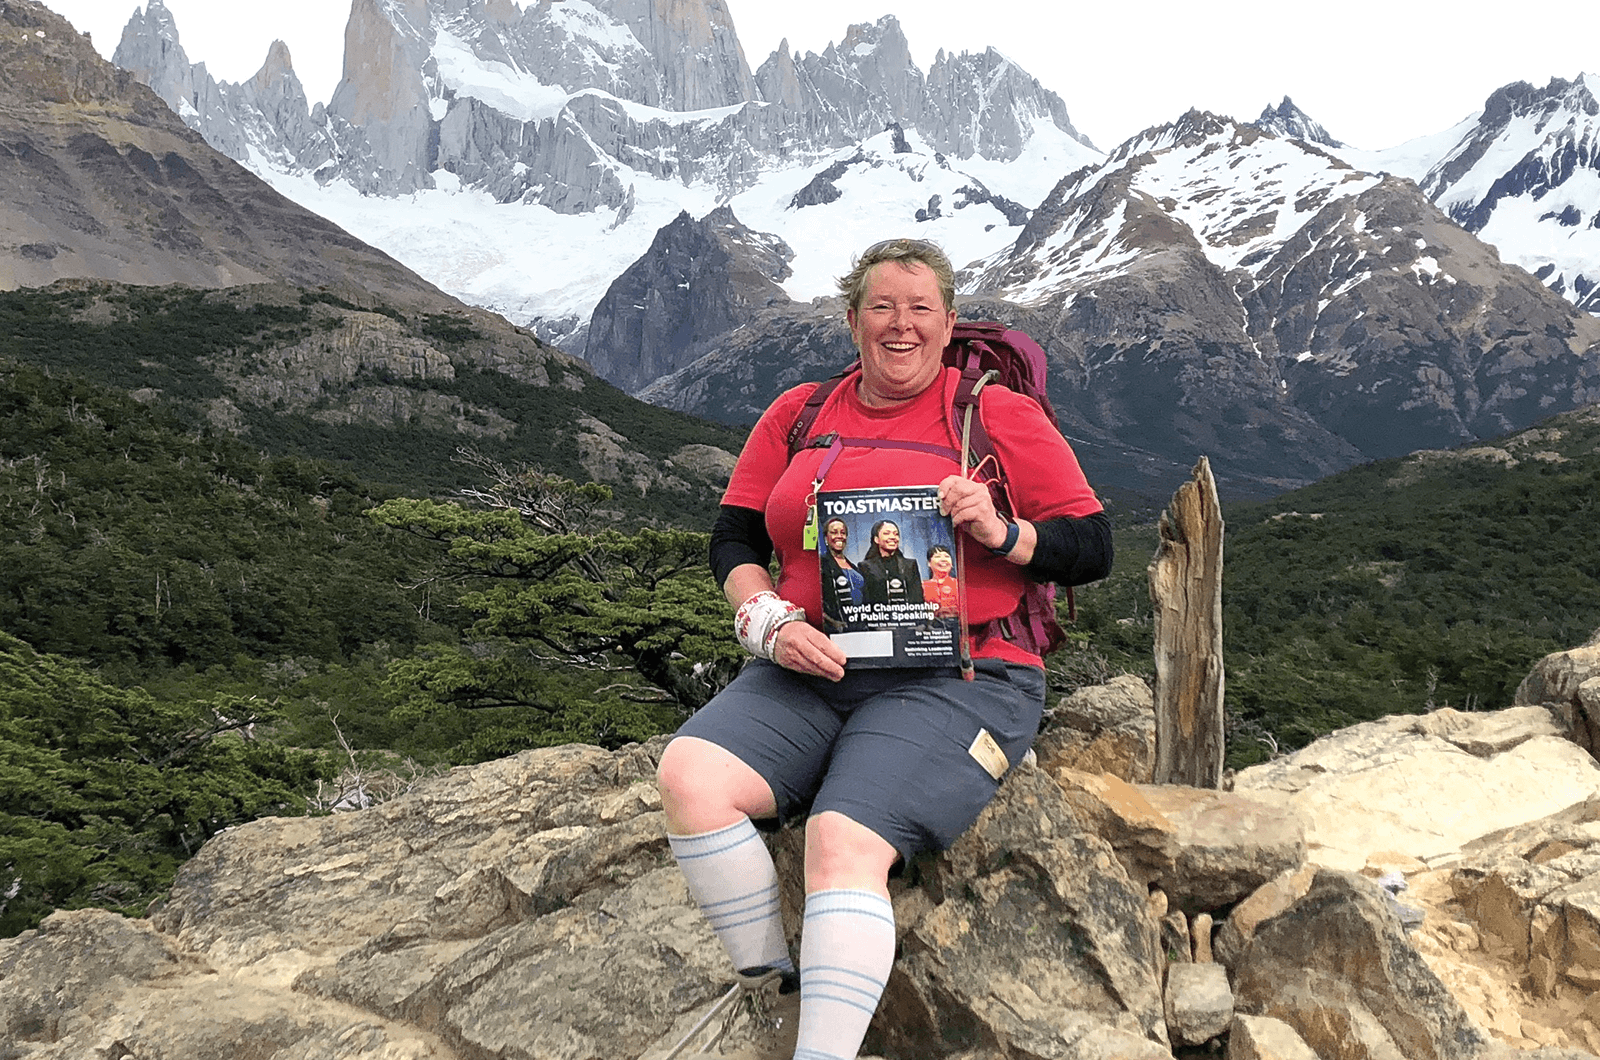 France Germain of Garibaldi Highlands, British Columbia, Canada, takes in the inspiring vistas of Mount Fitz Roy near El Chaltén, Argentina.